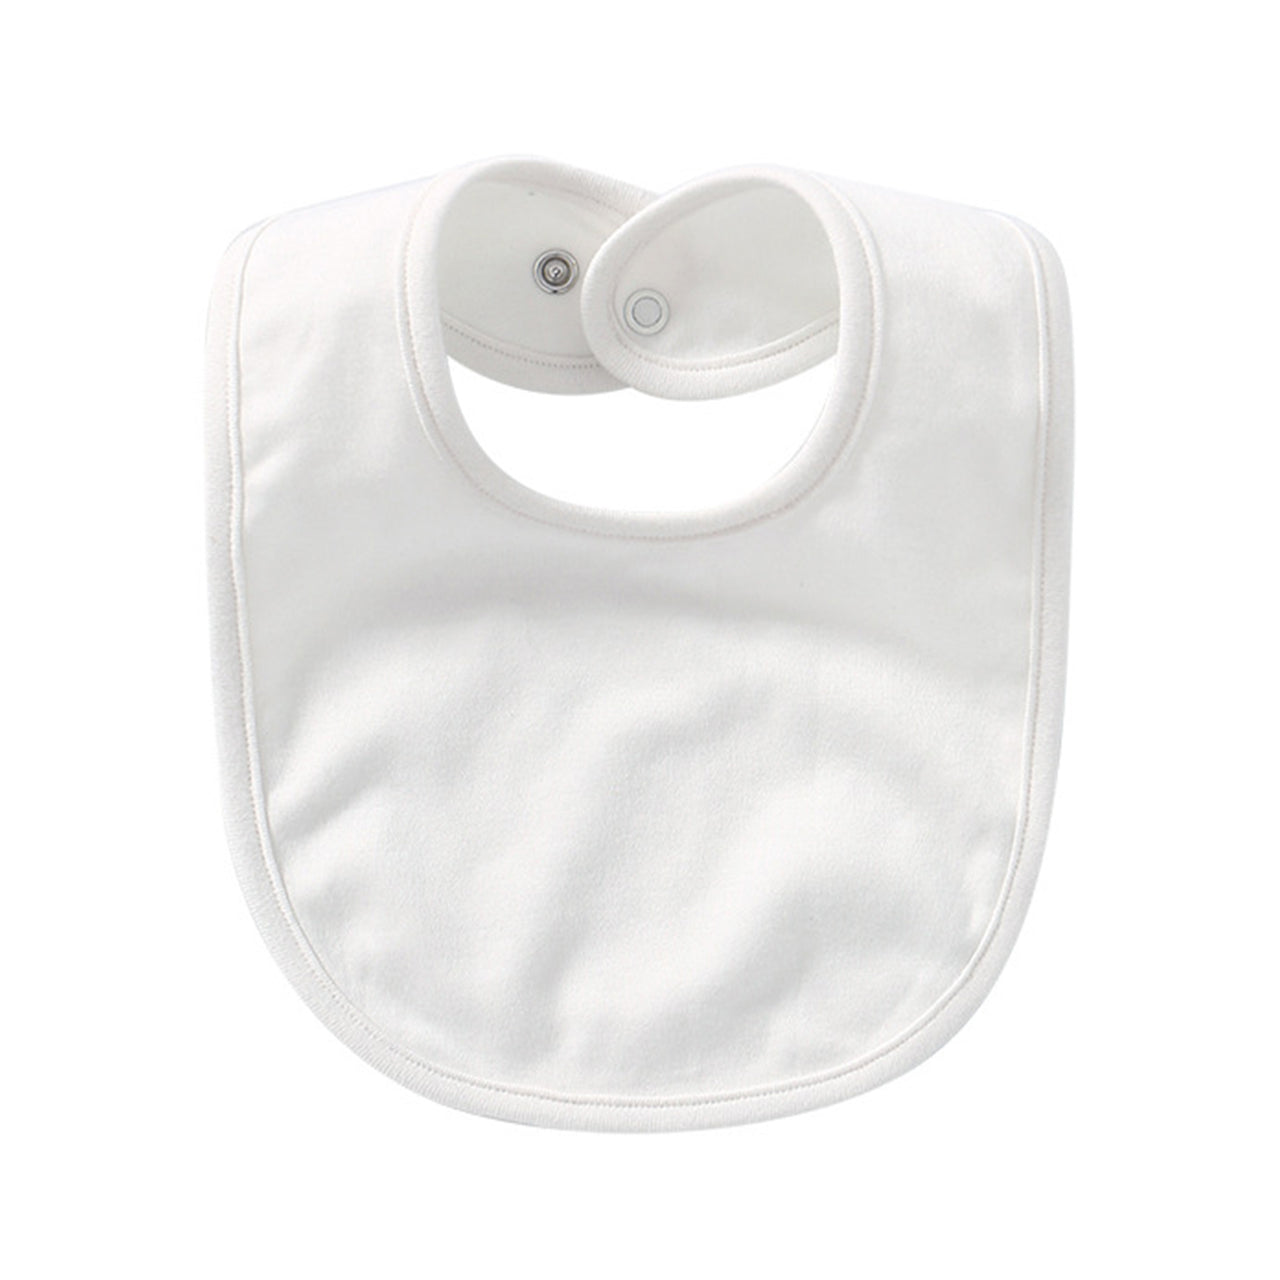 NO Design Super Quality  Baby Saliva & Feeding Towels